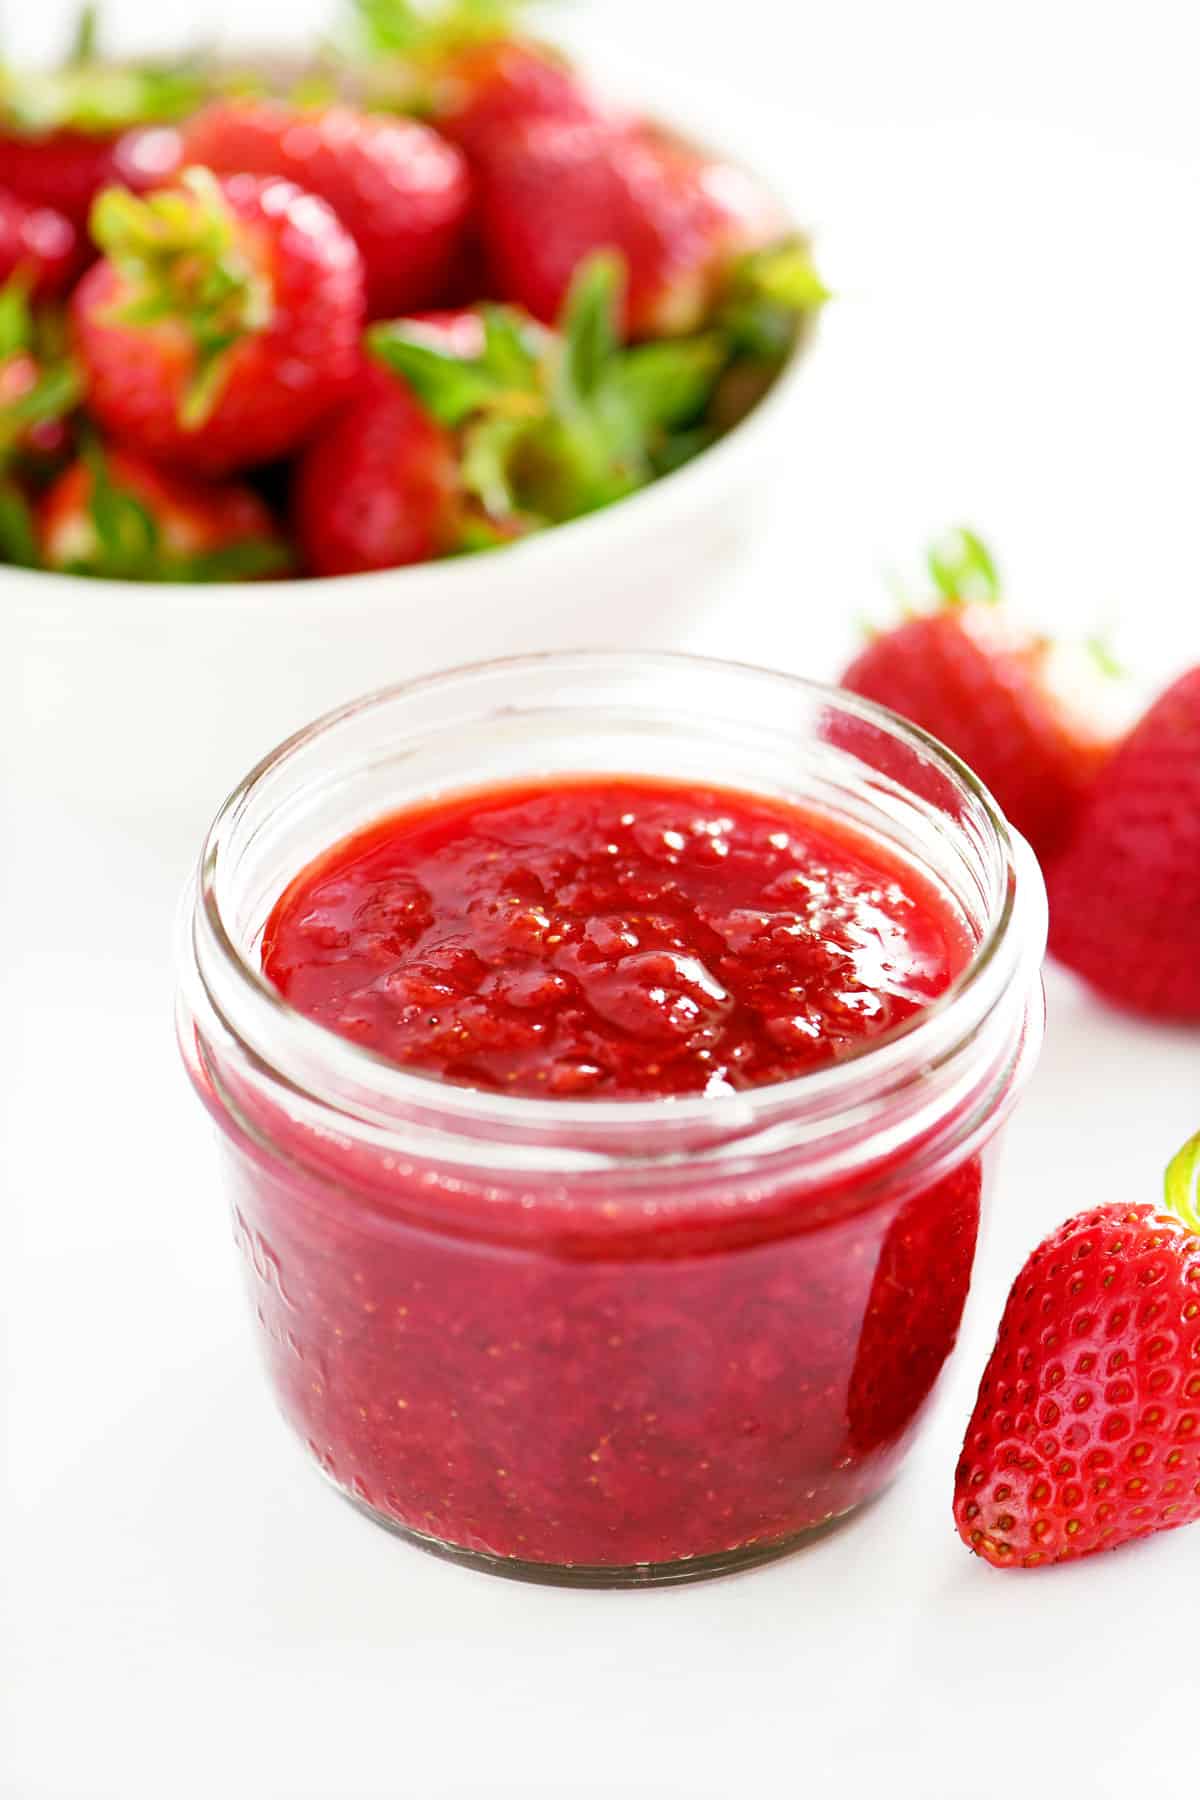 A jar with strawberry sauce inside.